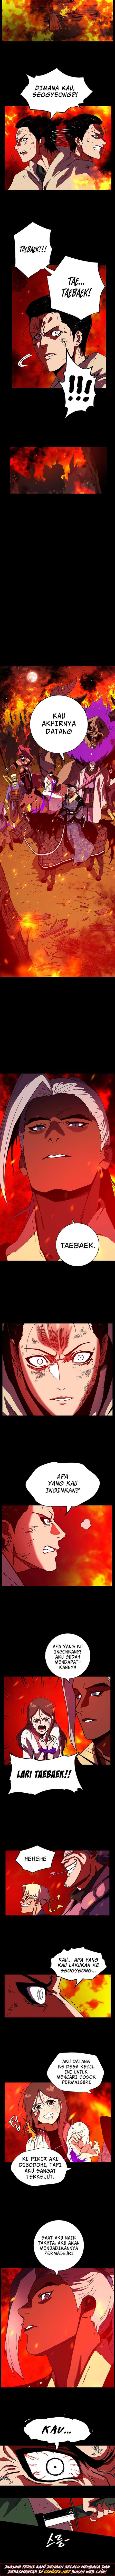 Taebaek: The Tutorial Man Chapter 1